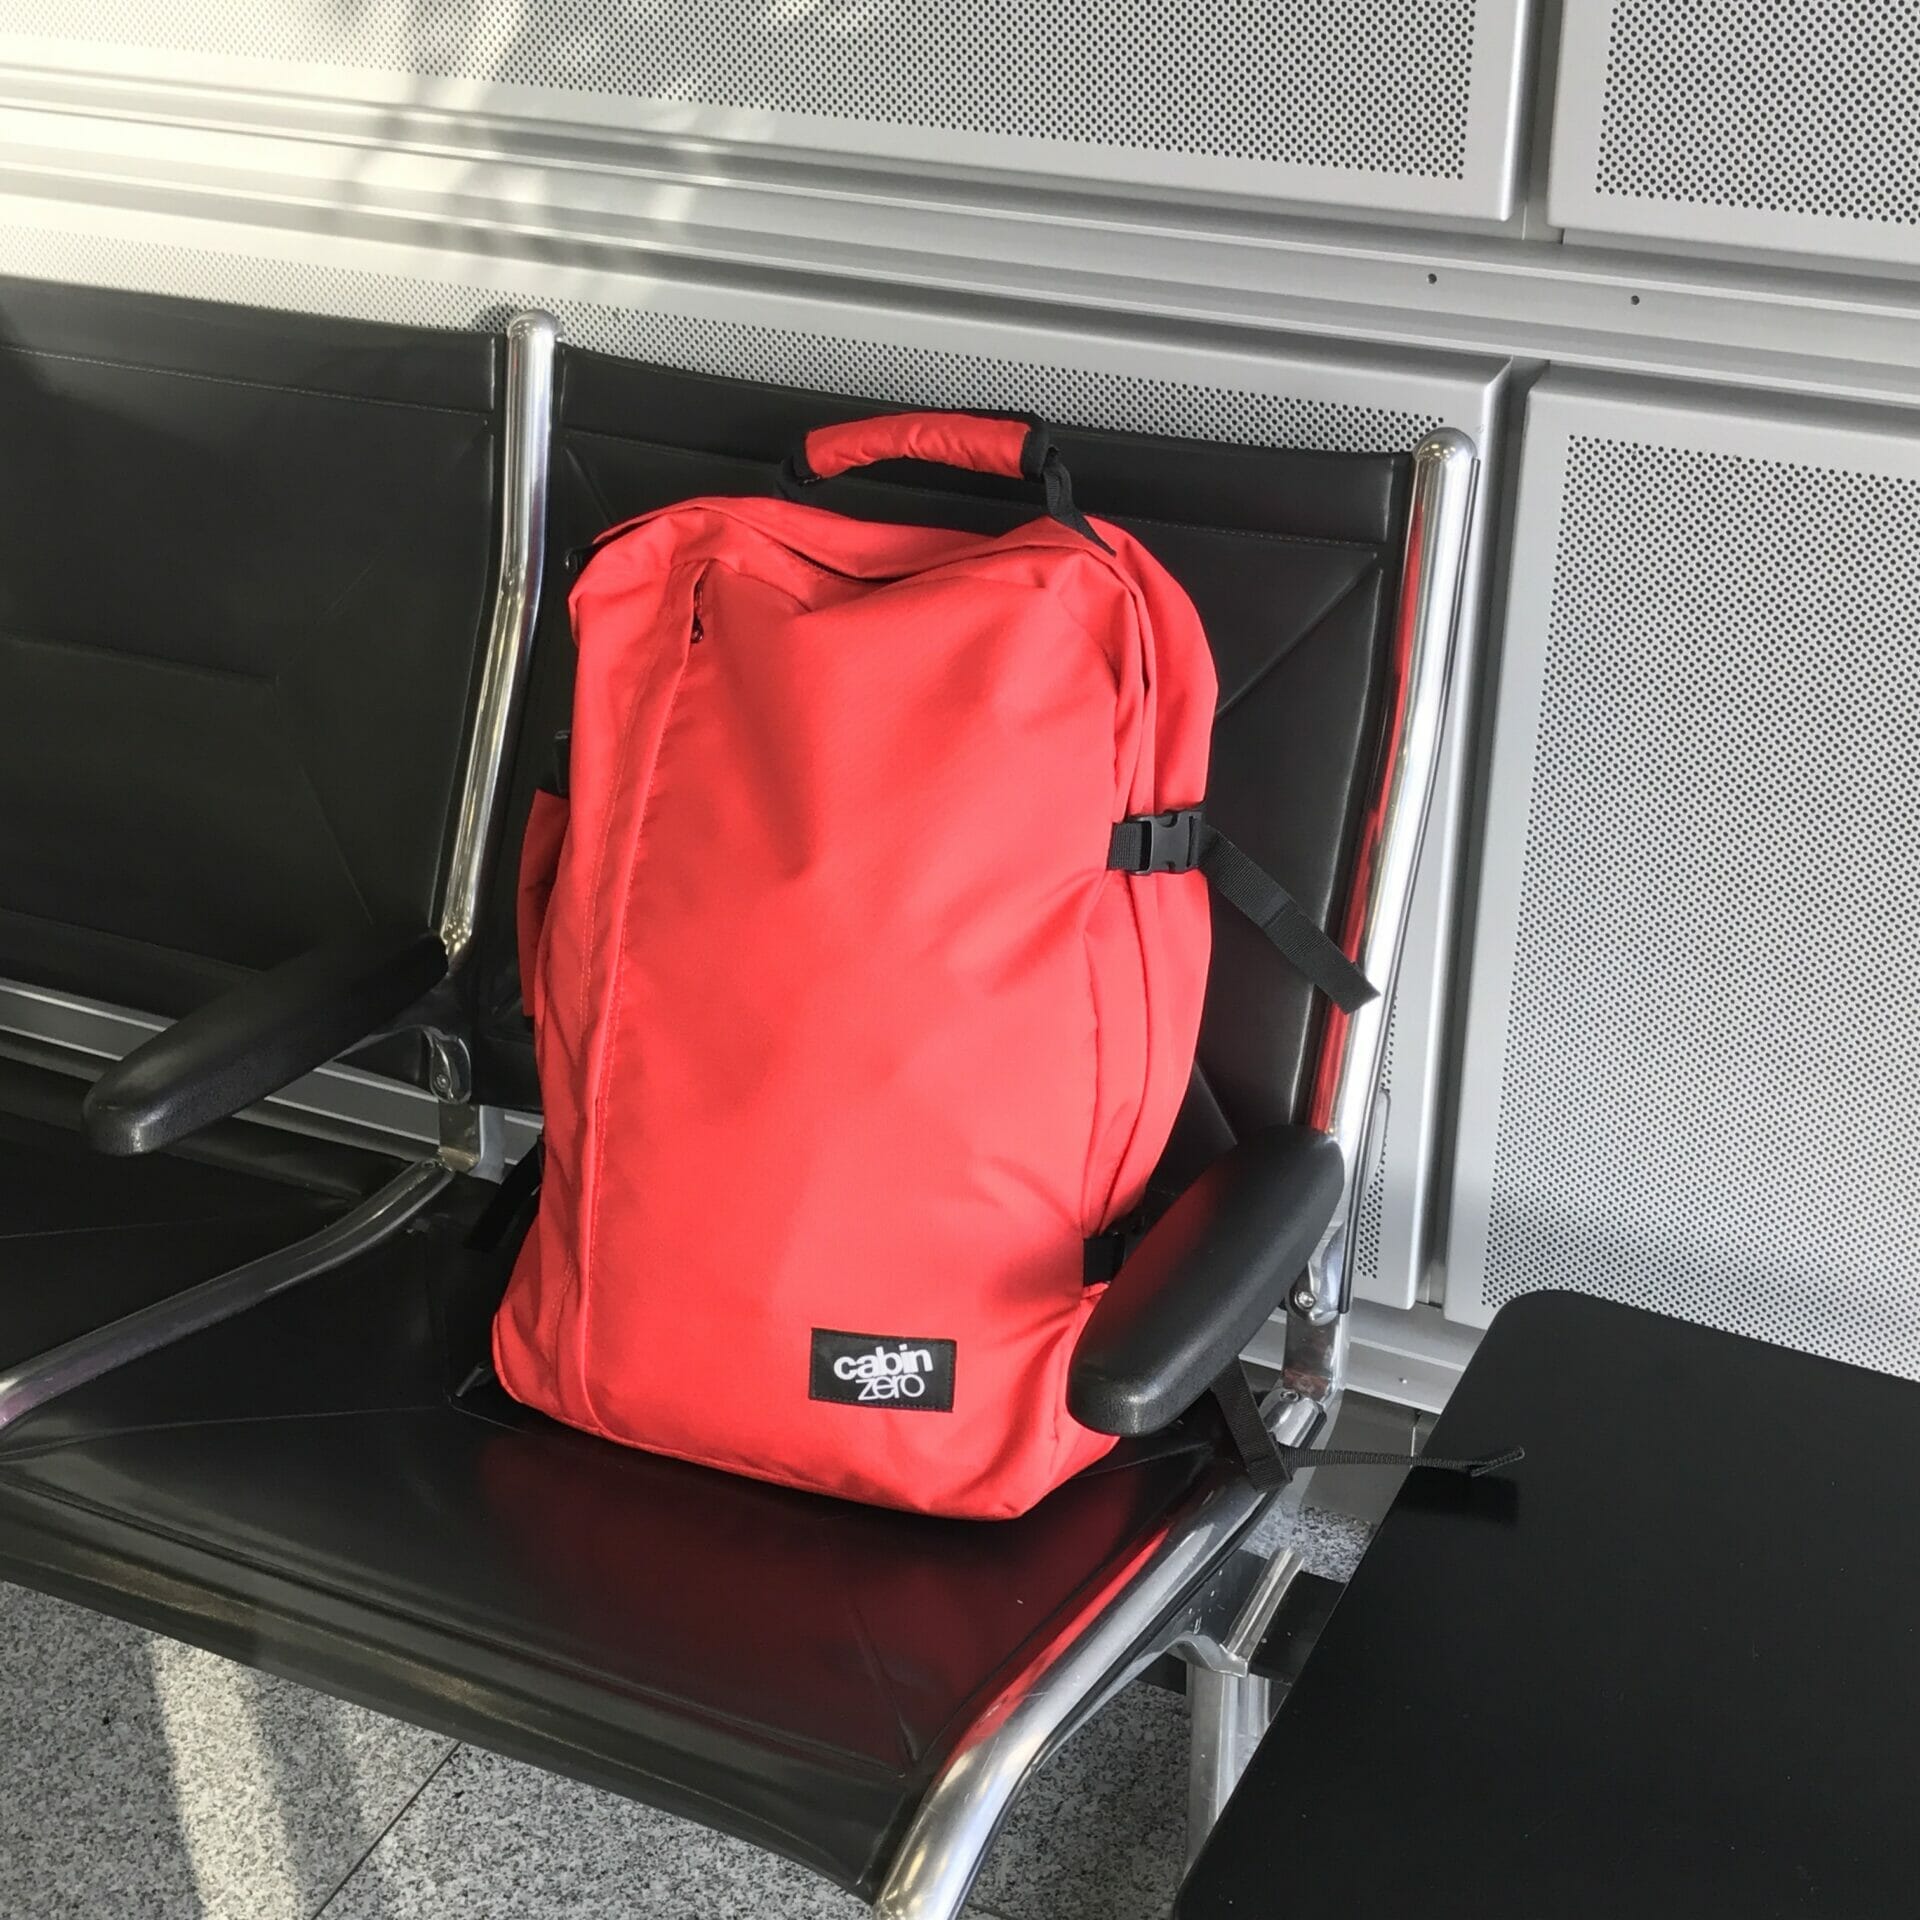 Hand luggage backpack, Cabin Zero Classic